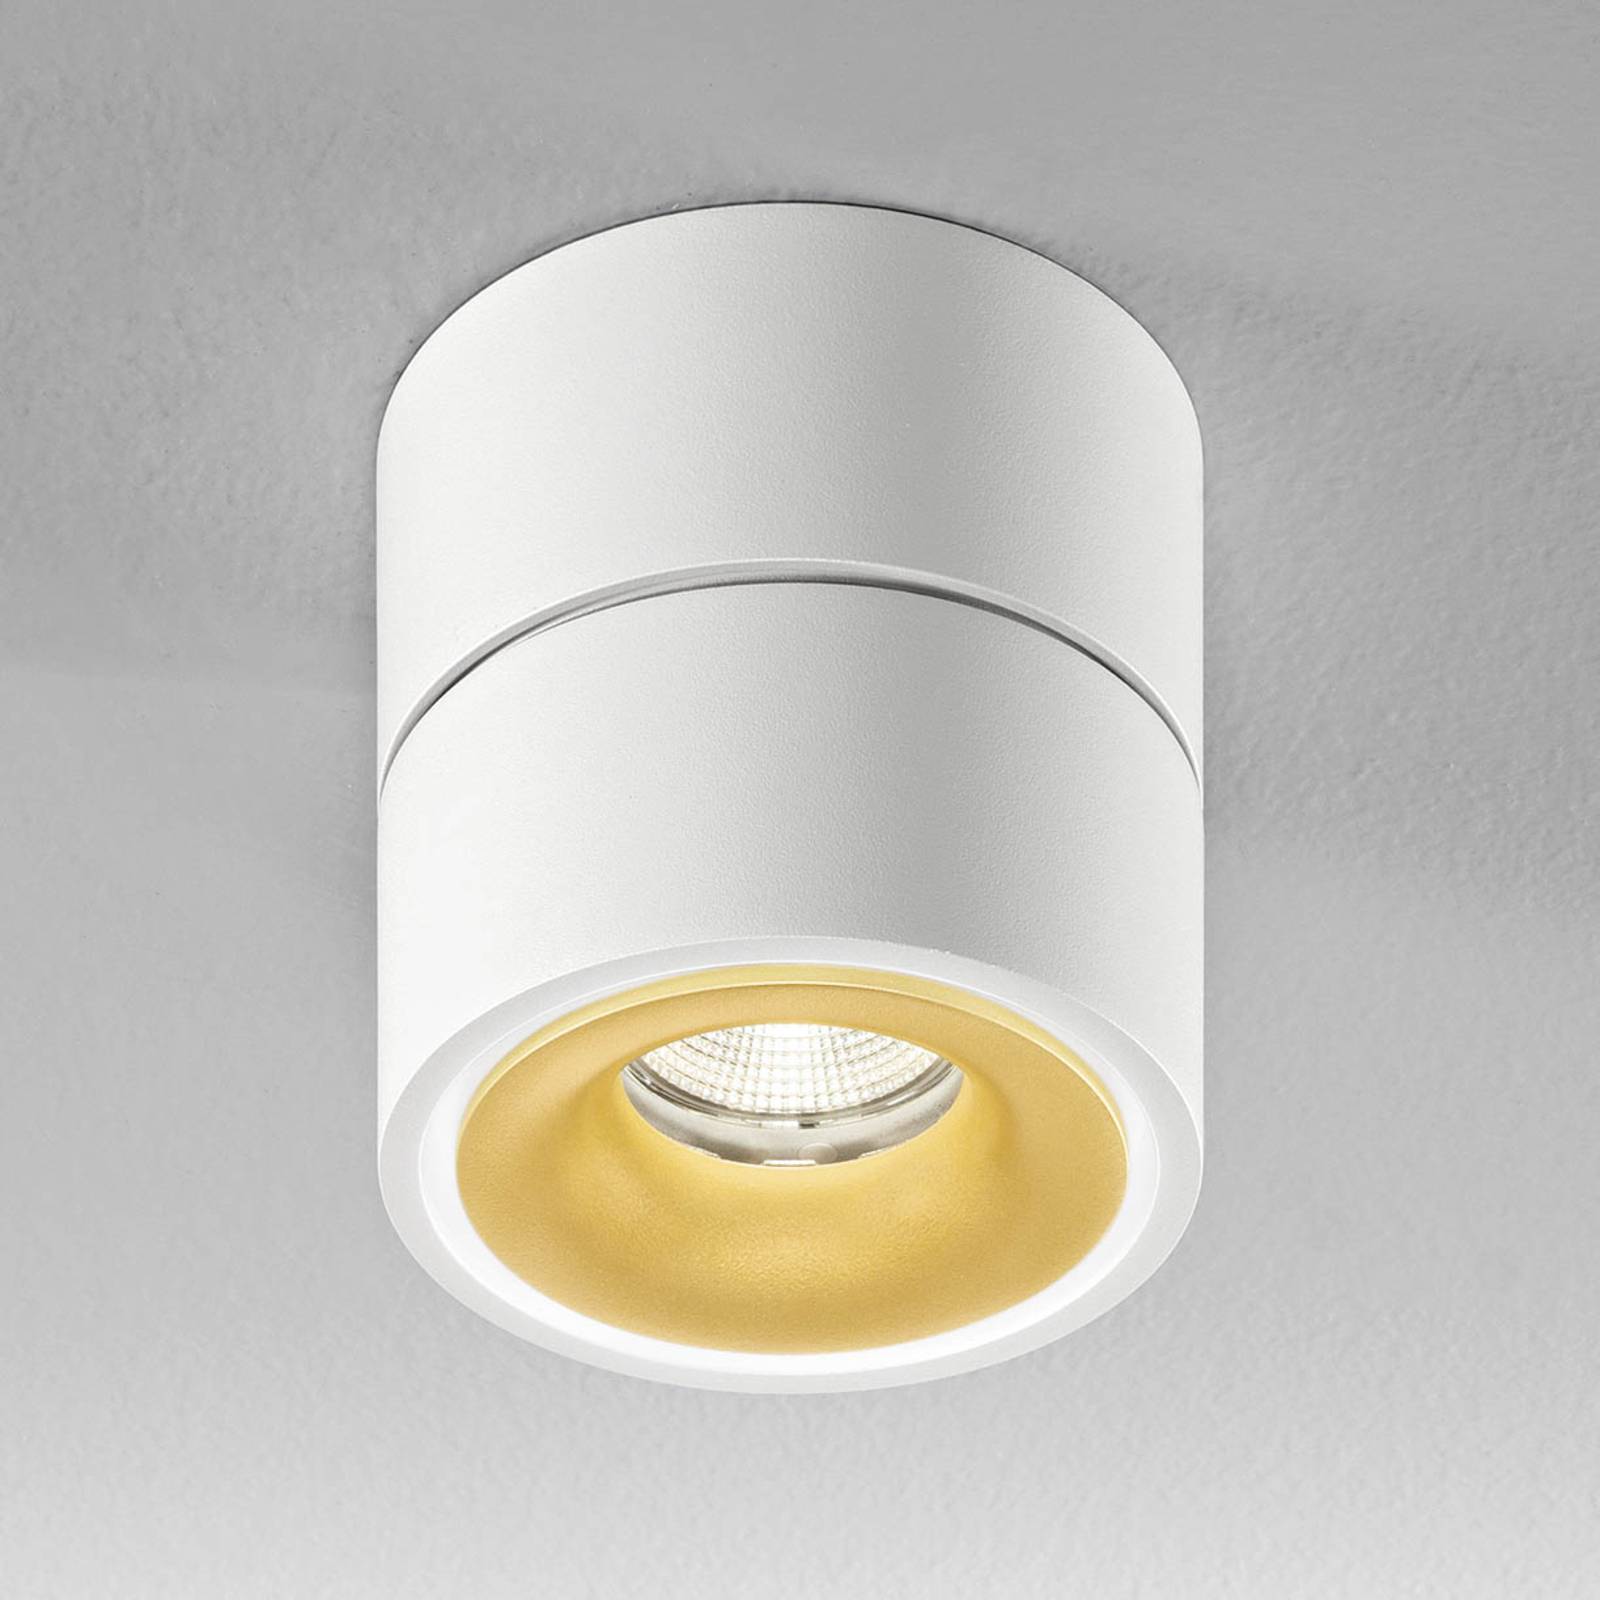 Image of Egger Licht Egger Clippo S spot pour plafond LED, blanc/doré 